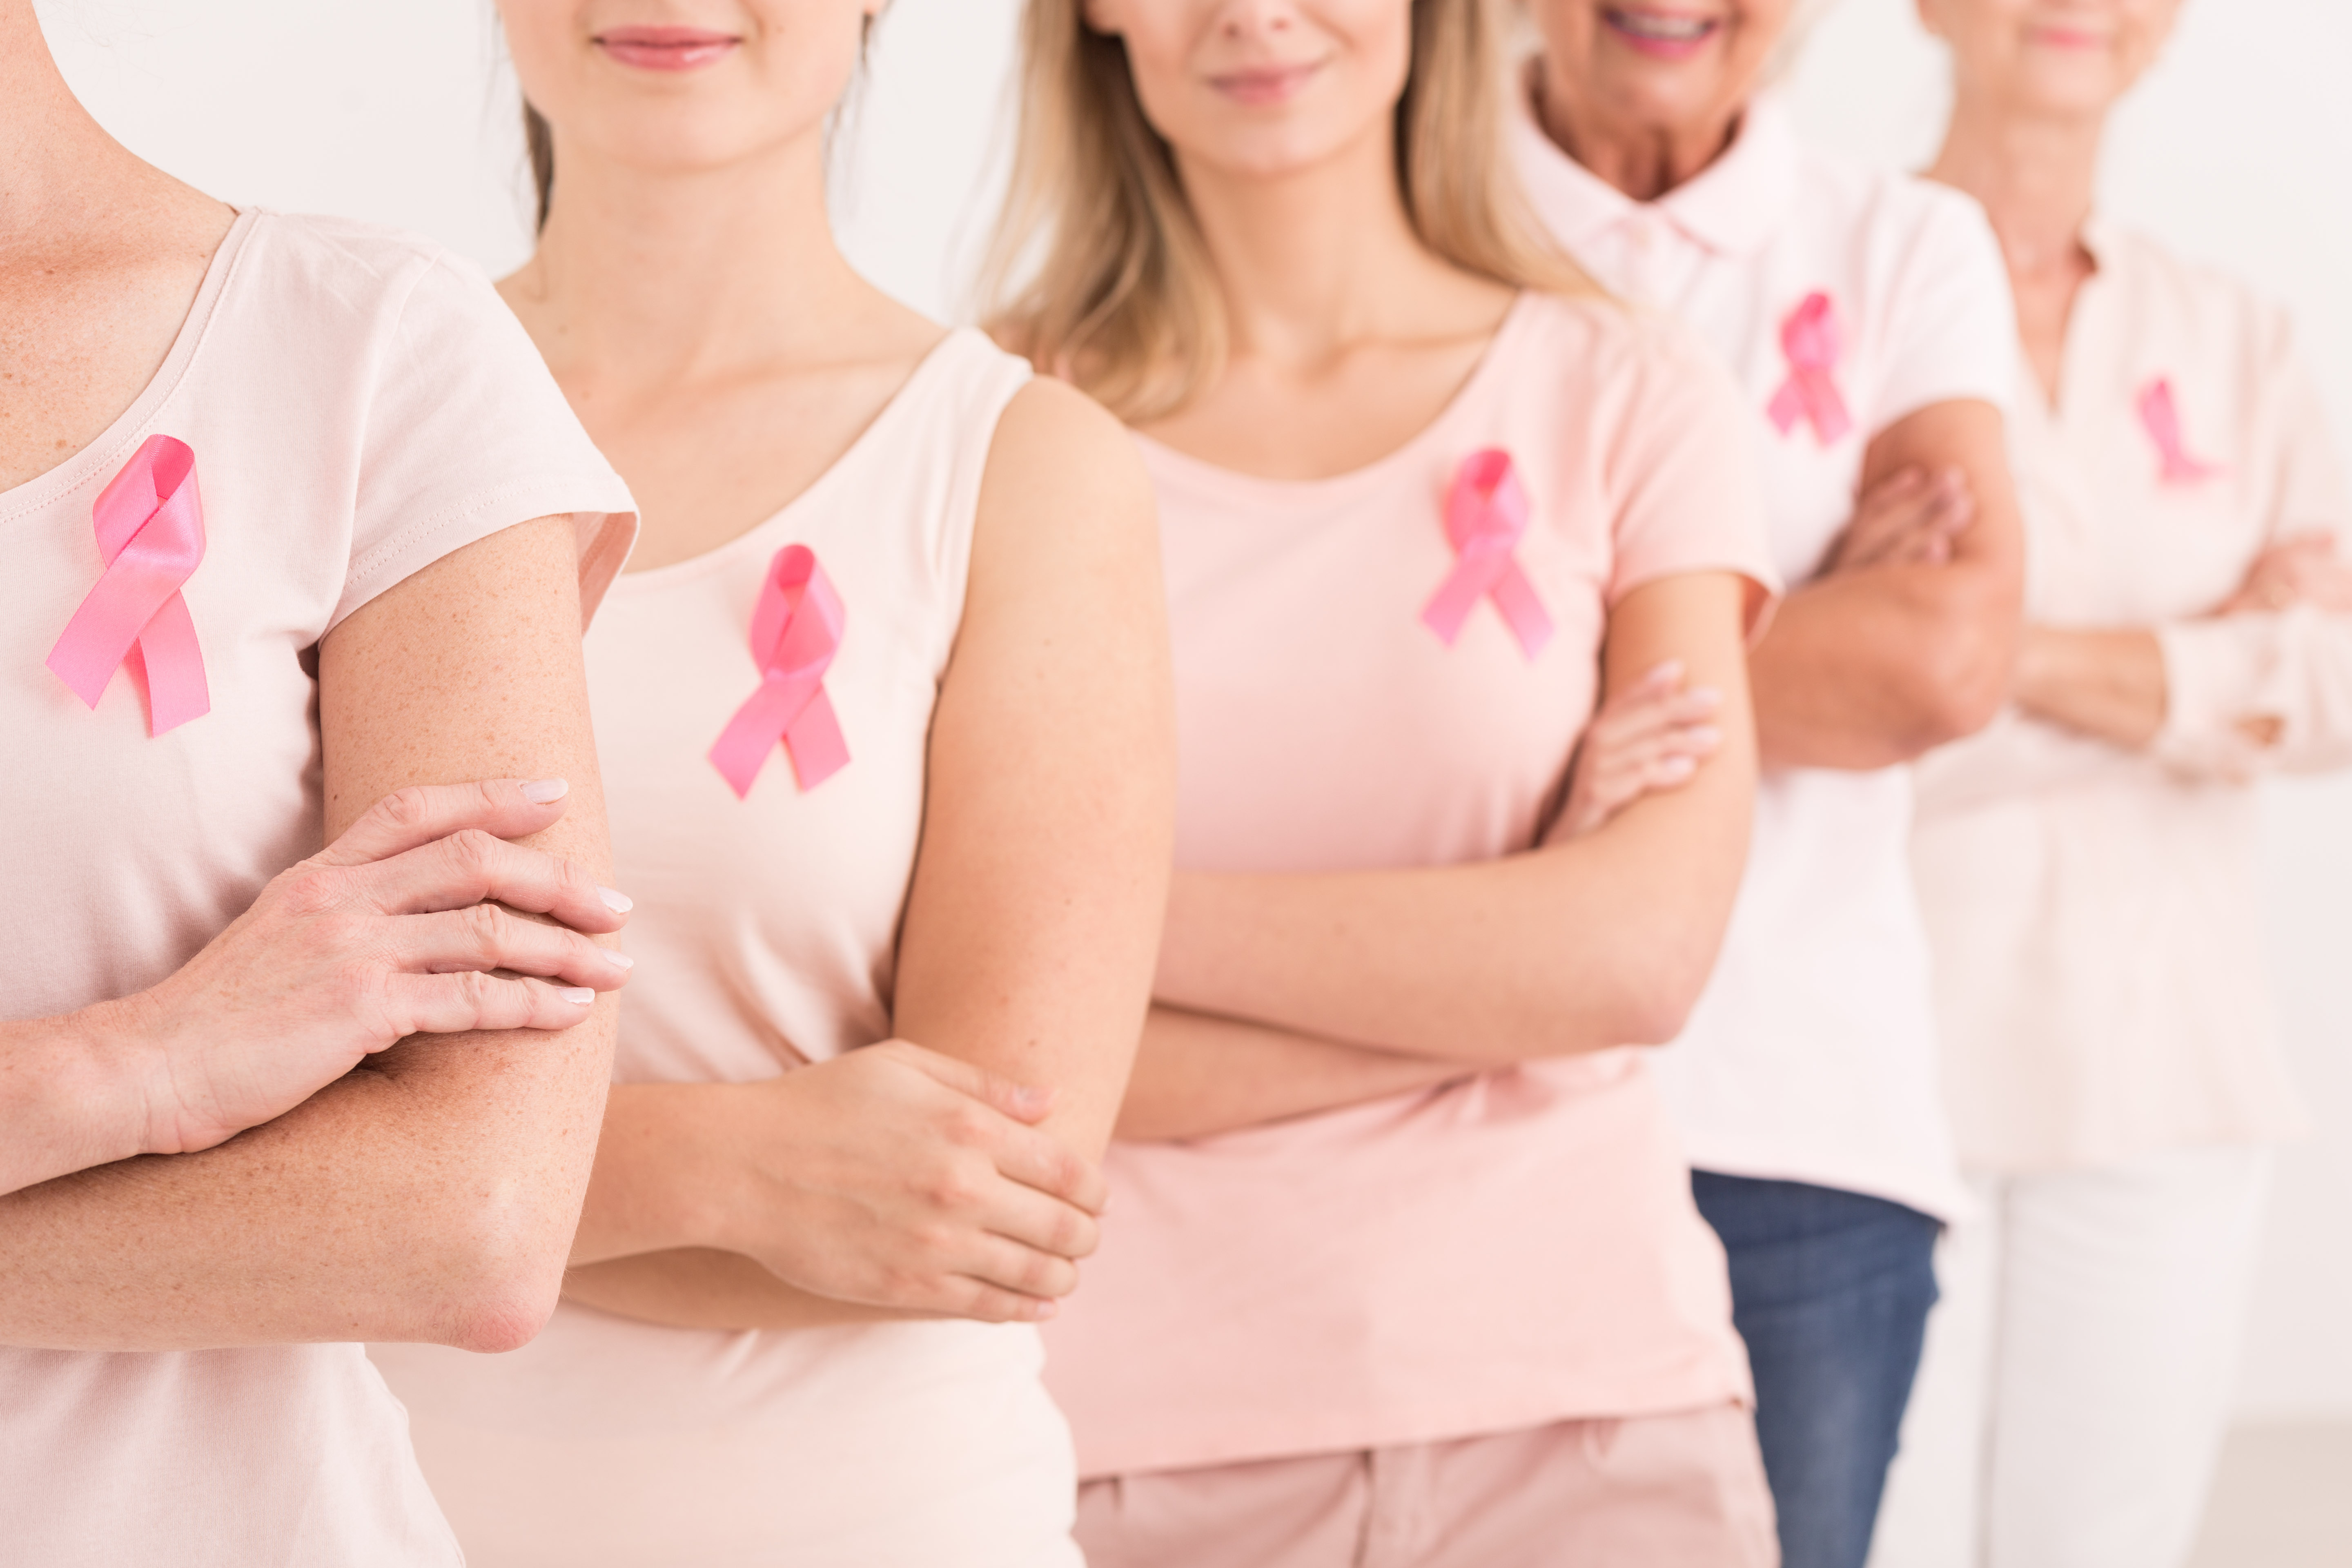 Breast Cancer Awareness Month - October 2019